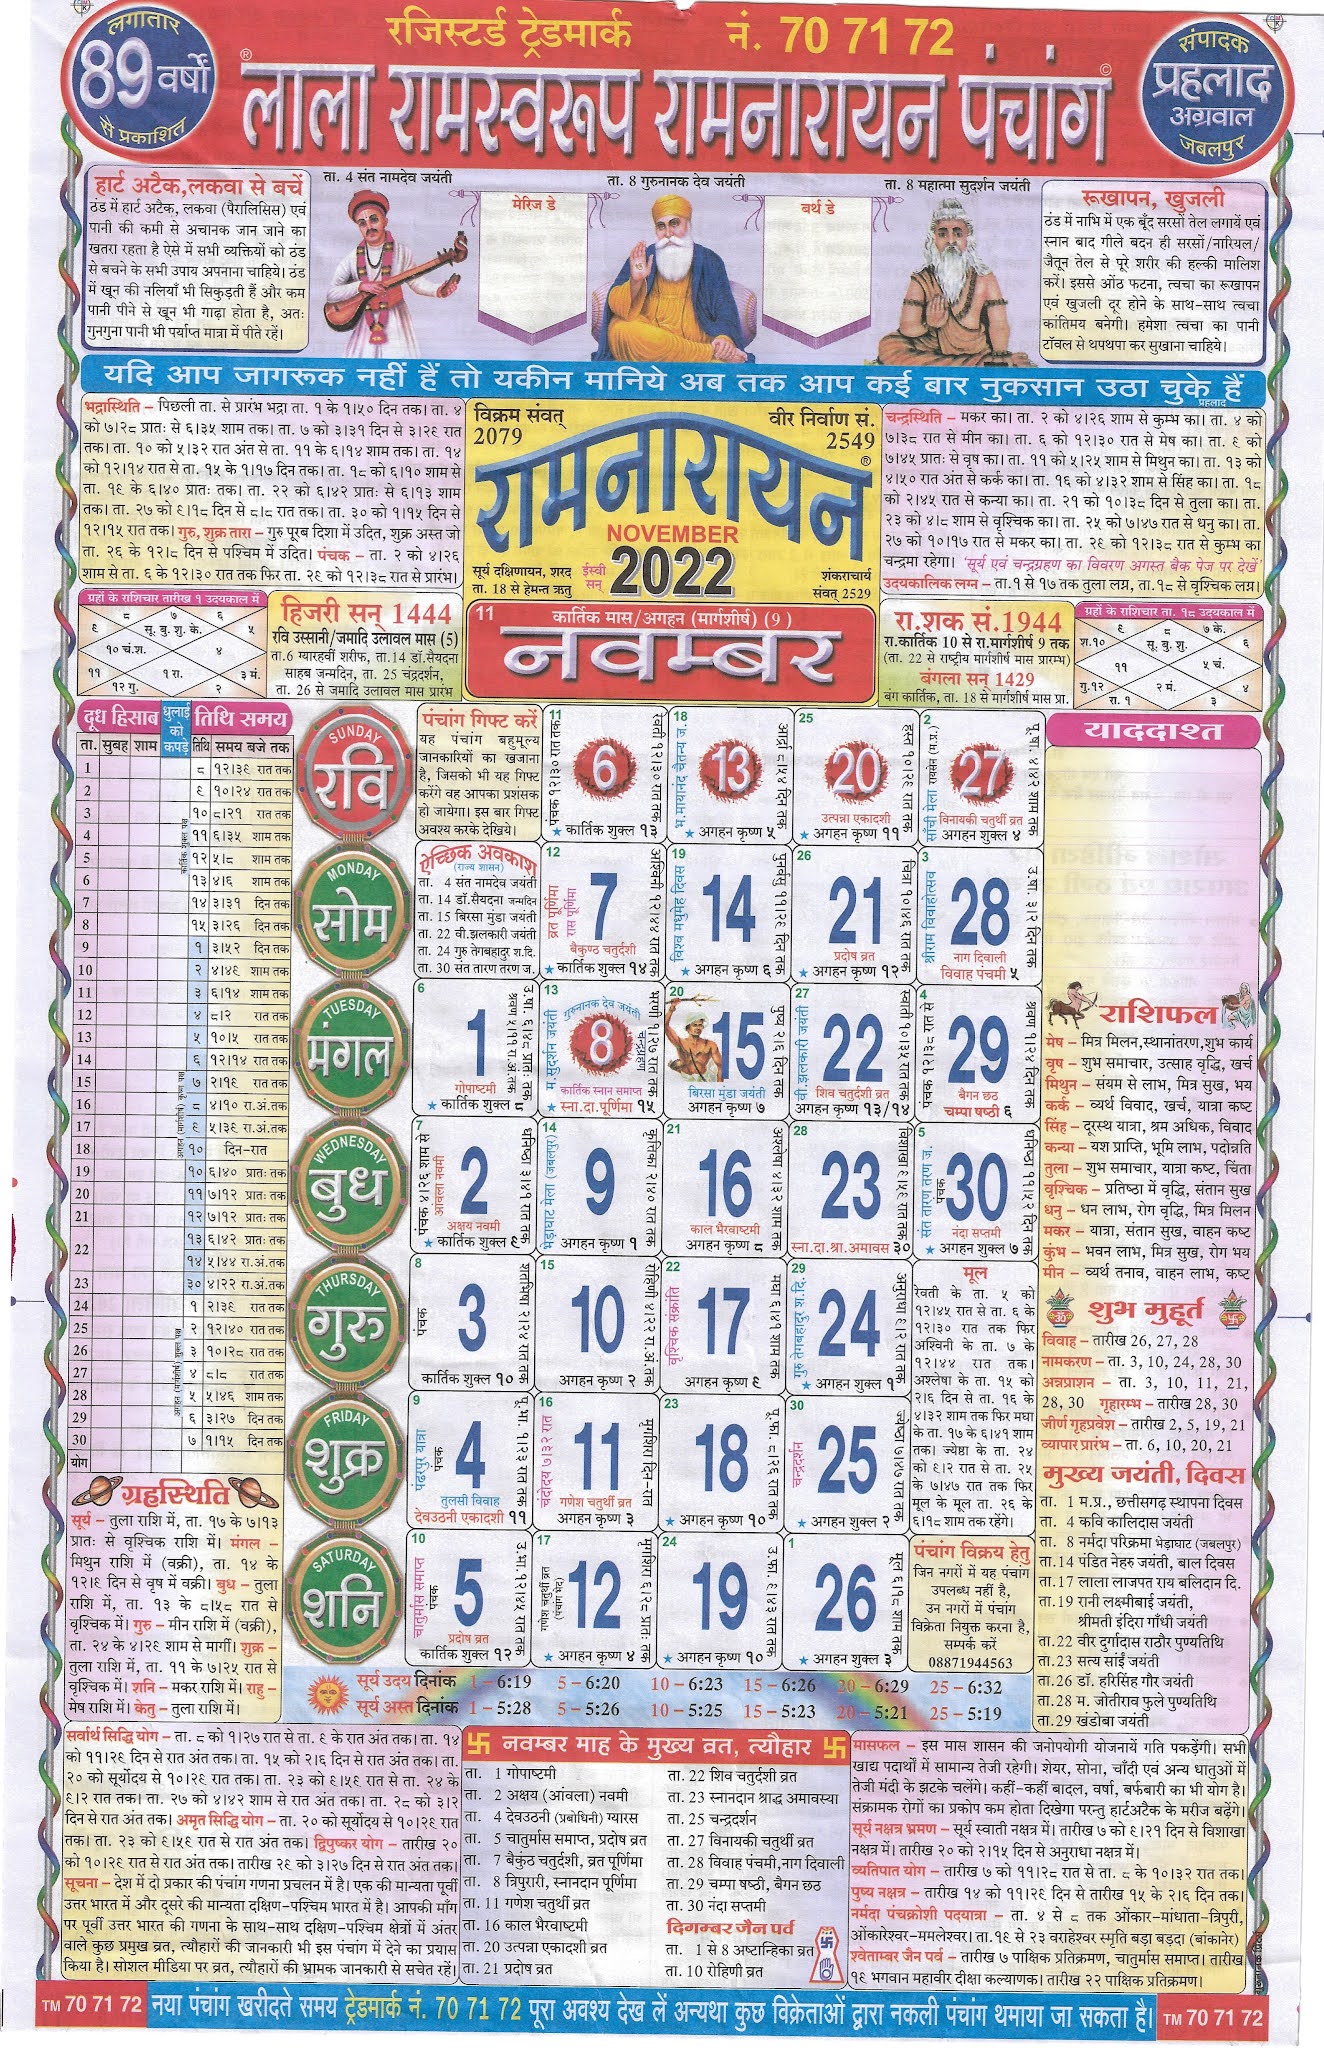 2018 calendar pdf download lala ramswaroop